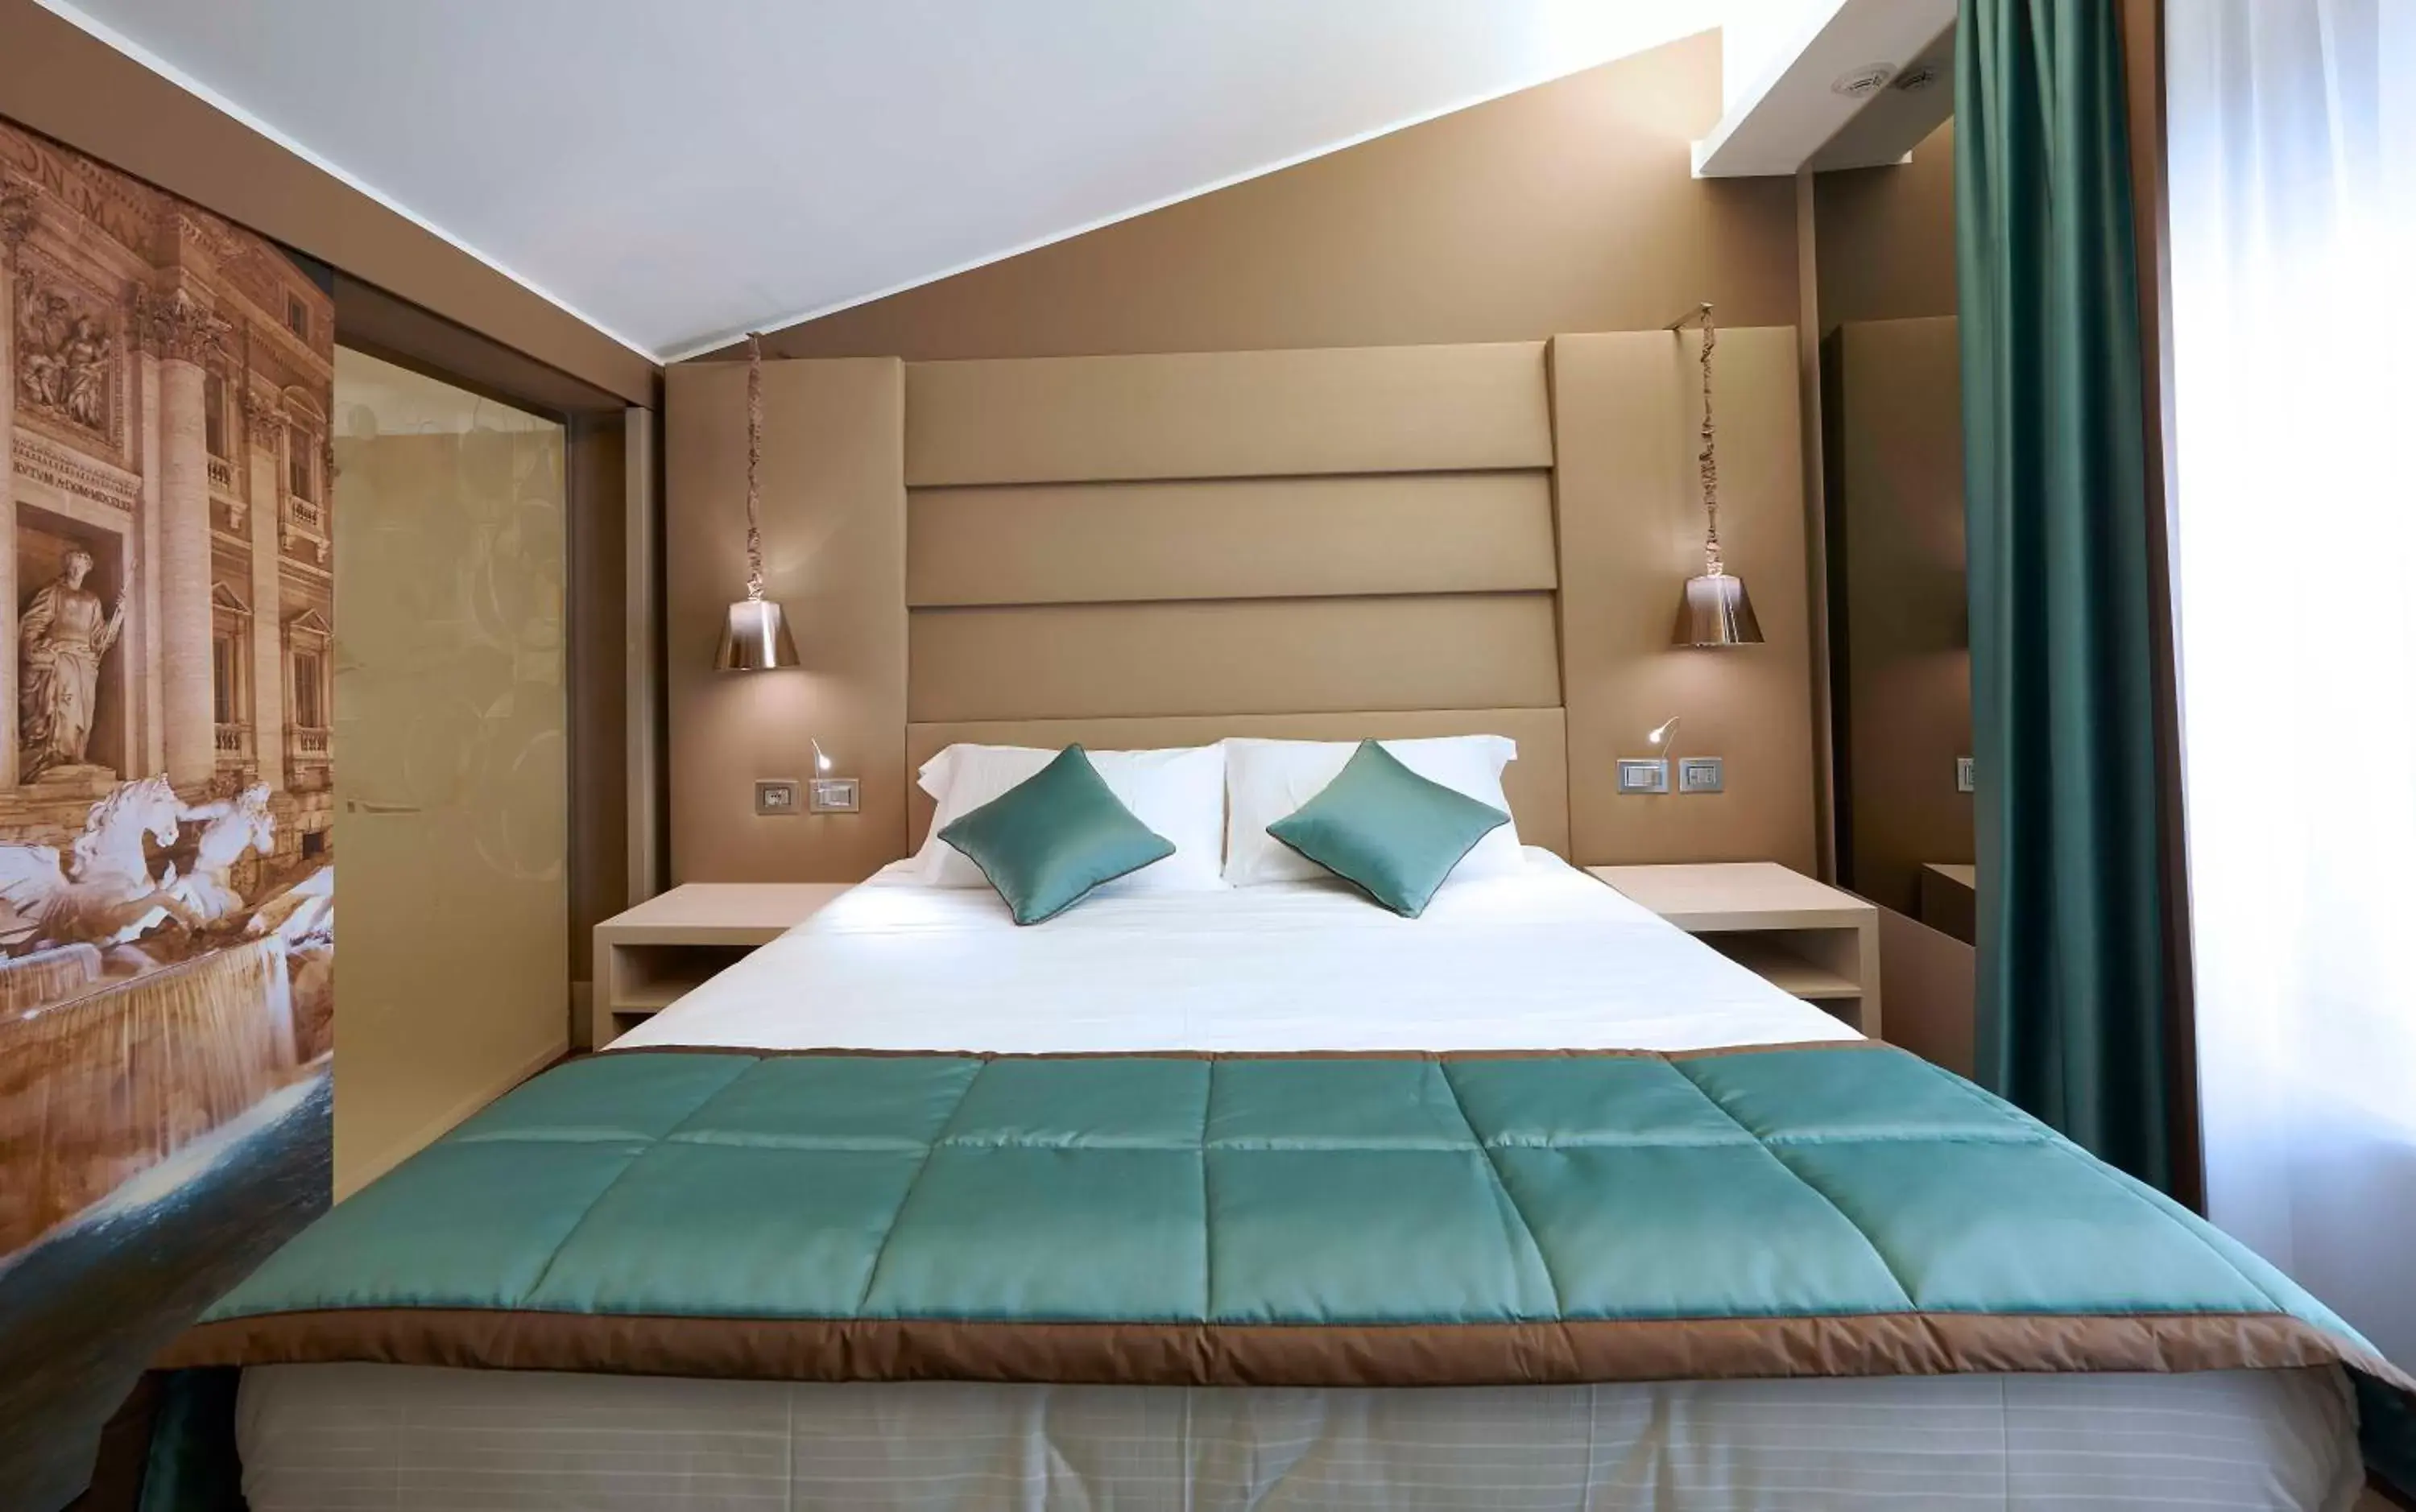 Bed, Room Photo in Harry's Bar Trevi Hotel & Restaurant